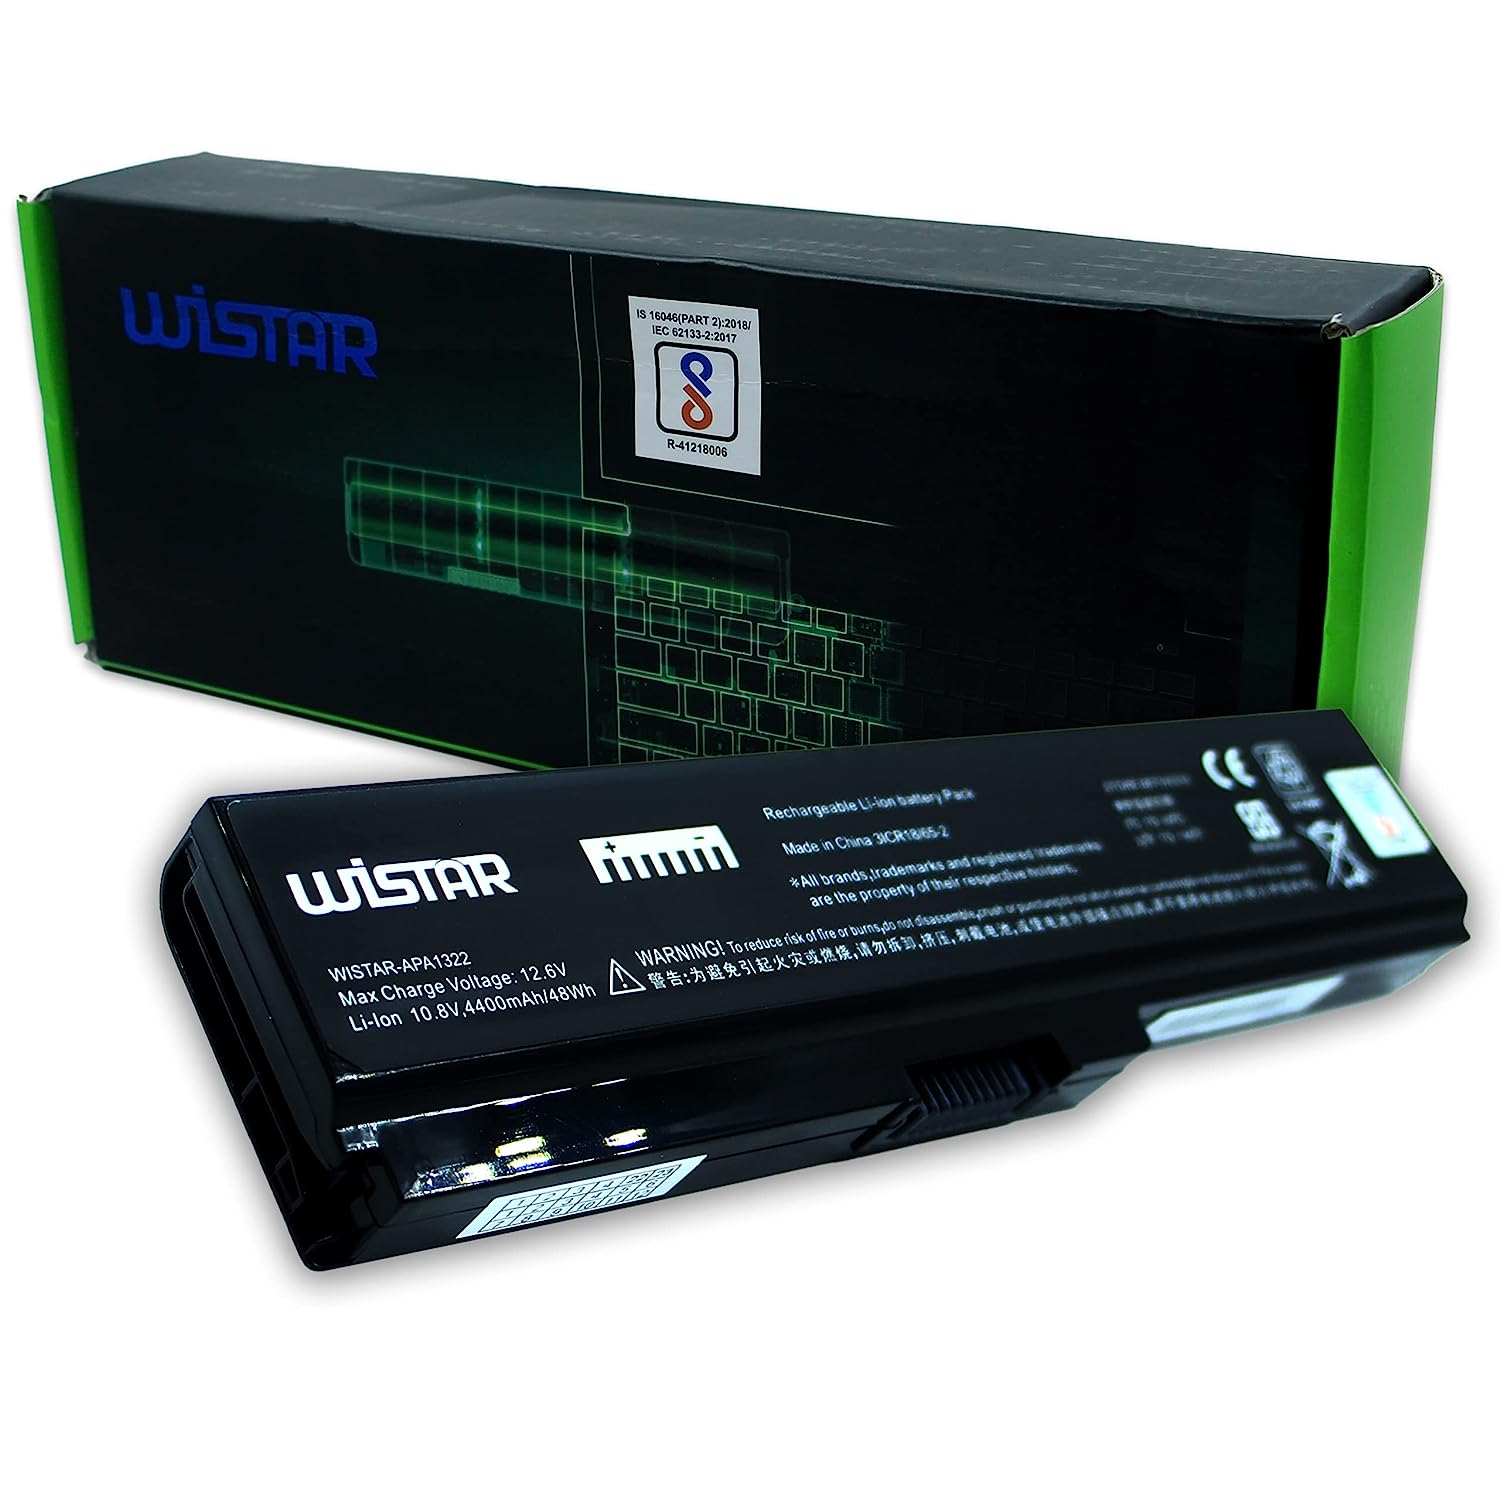 WISTAR PA3634U-1BAS Laptop Battery for Toshiba Satellite C650 C650D C655 C655D C660D L515 PA3634U-1BRS PA3635U-1BAM PABAS116 PABAS117 PABAS118 PABAS178 PABAS228 PABAS230 Battery